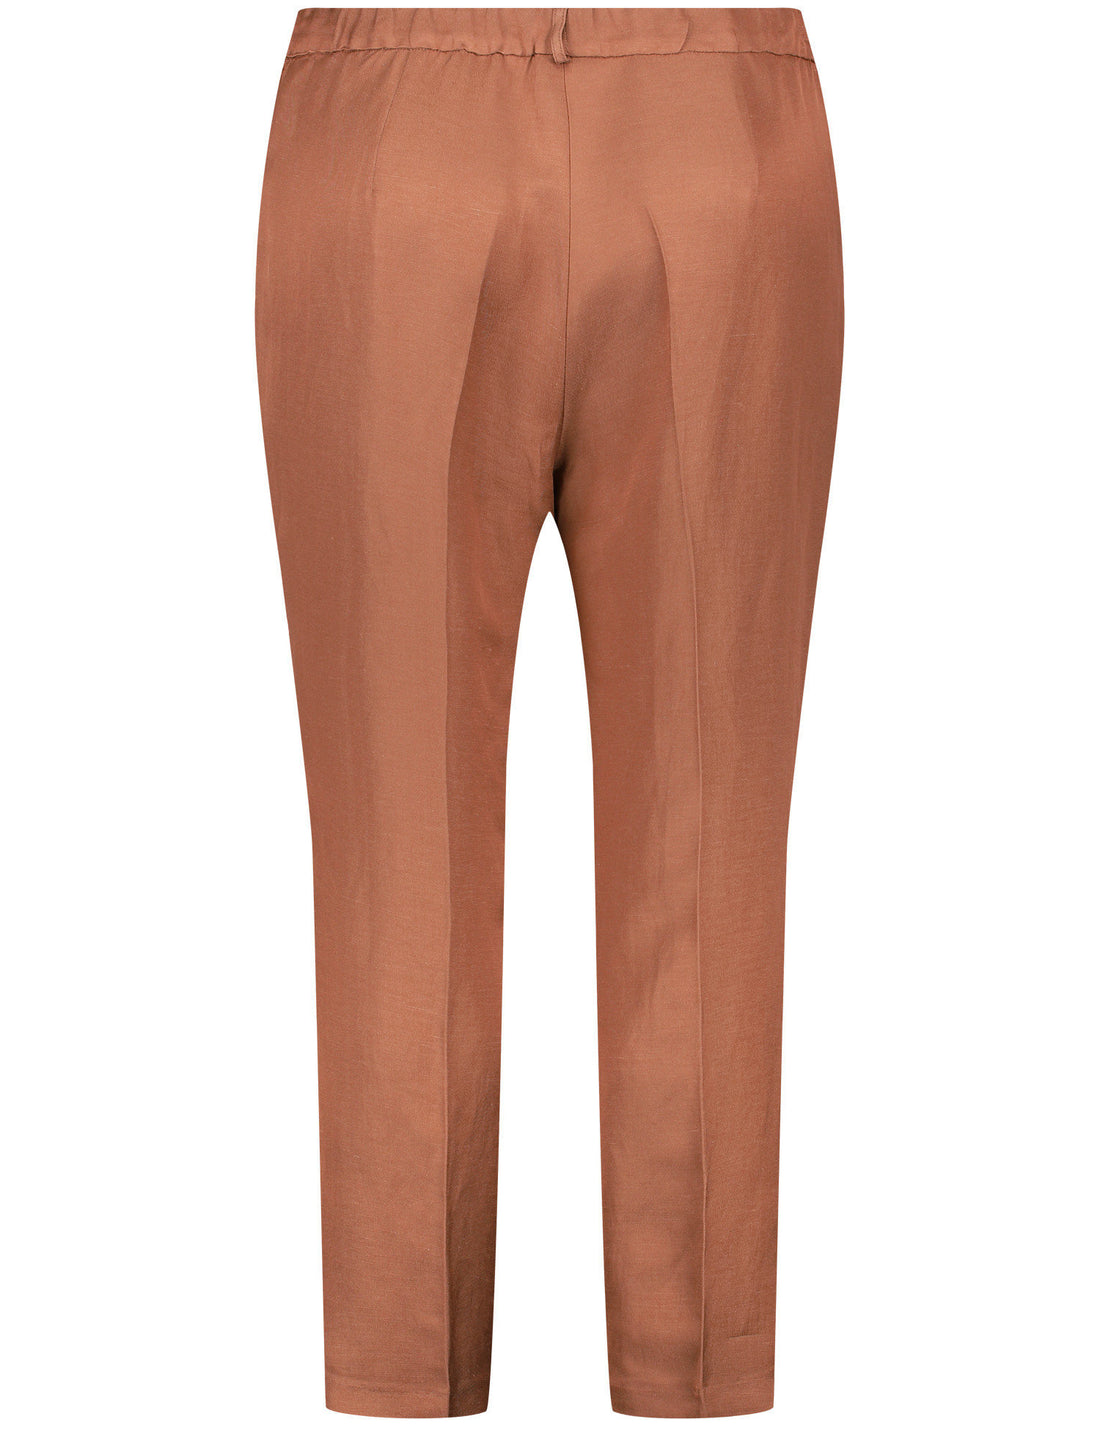 7/8 Length Linen Blend Trousers, Greta_320205-21302_7360_02